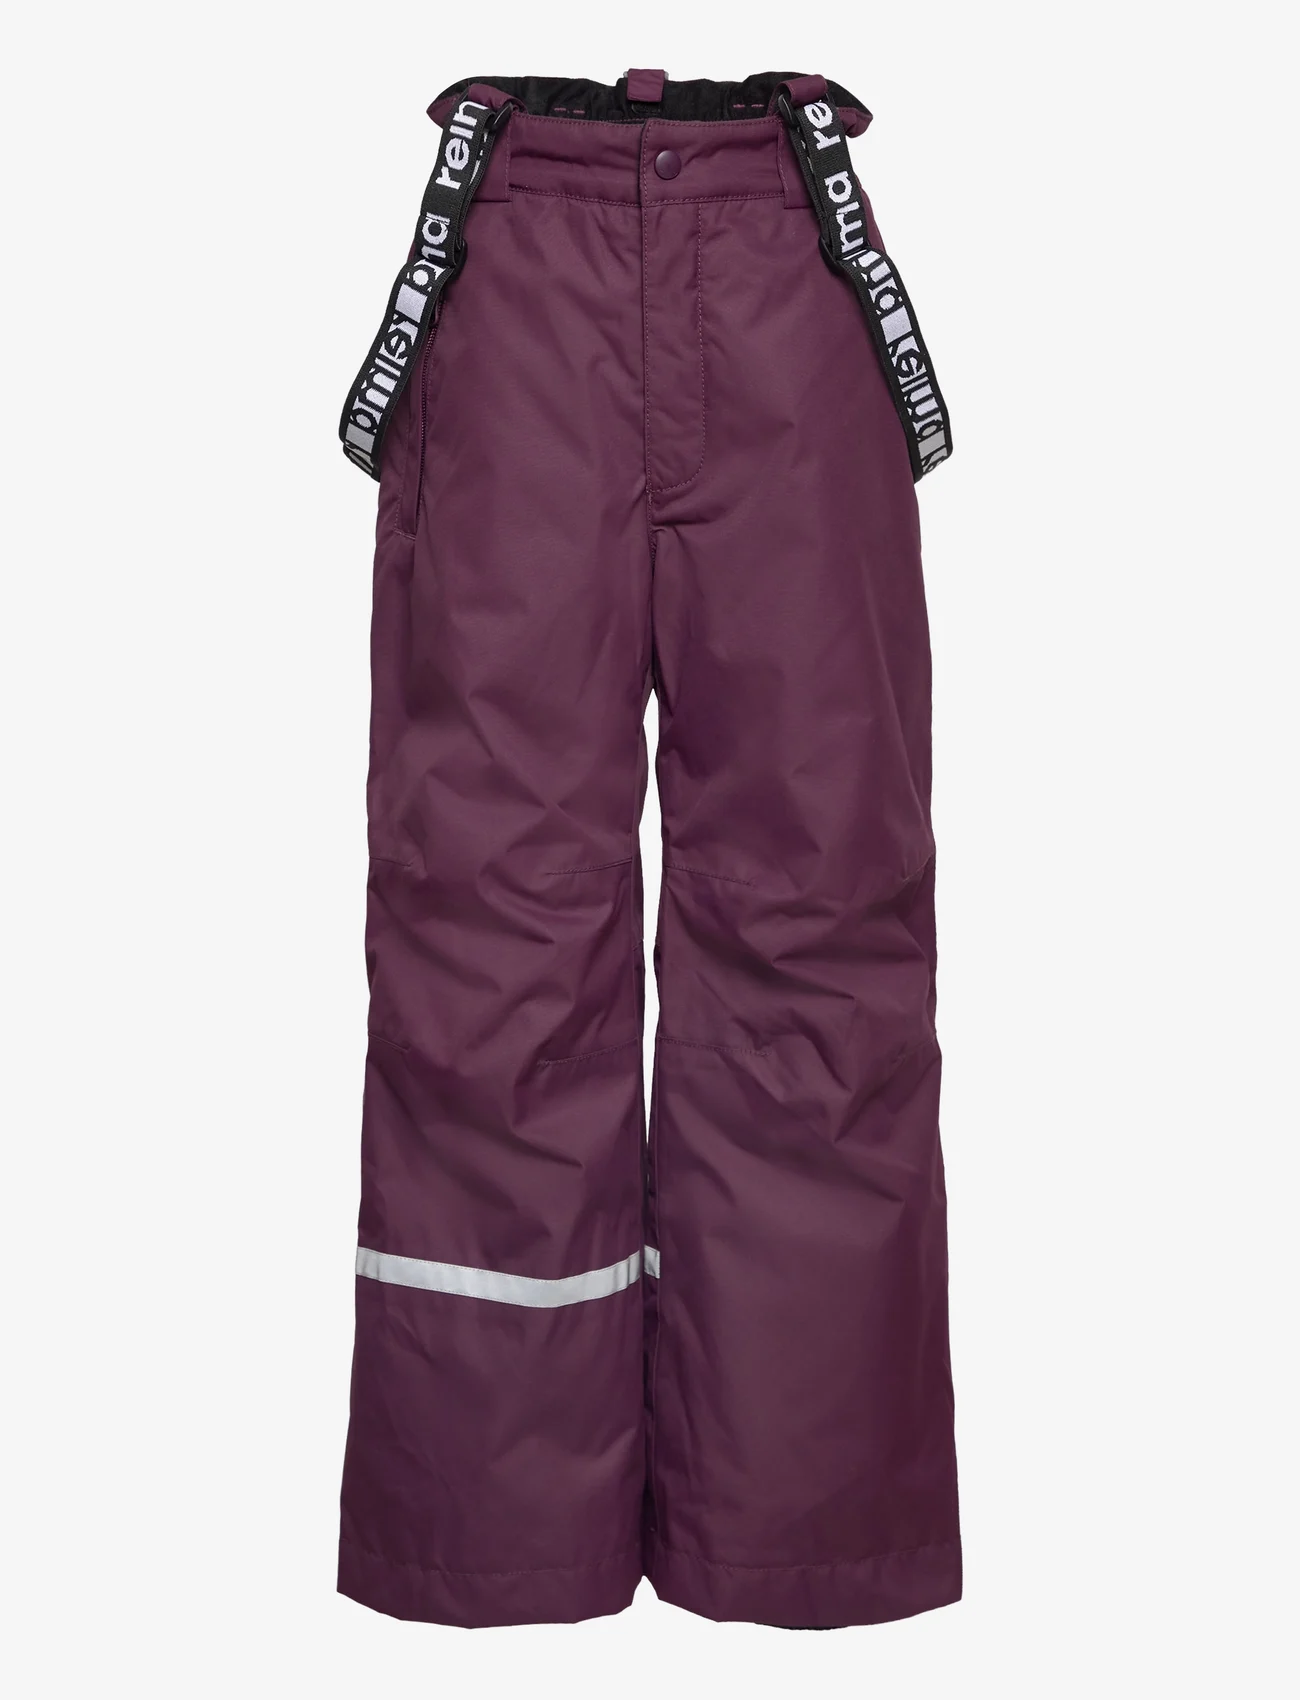 Reima - Winter pants, Tuokio - friluftsbyxor - deep purple - 0